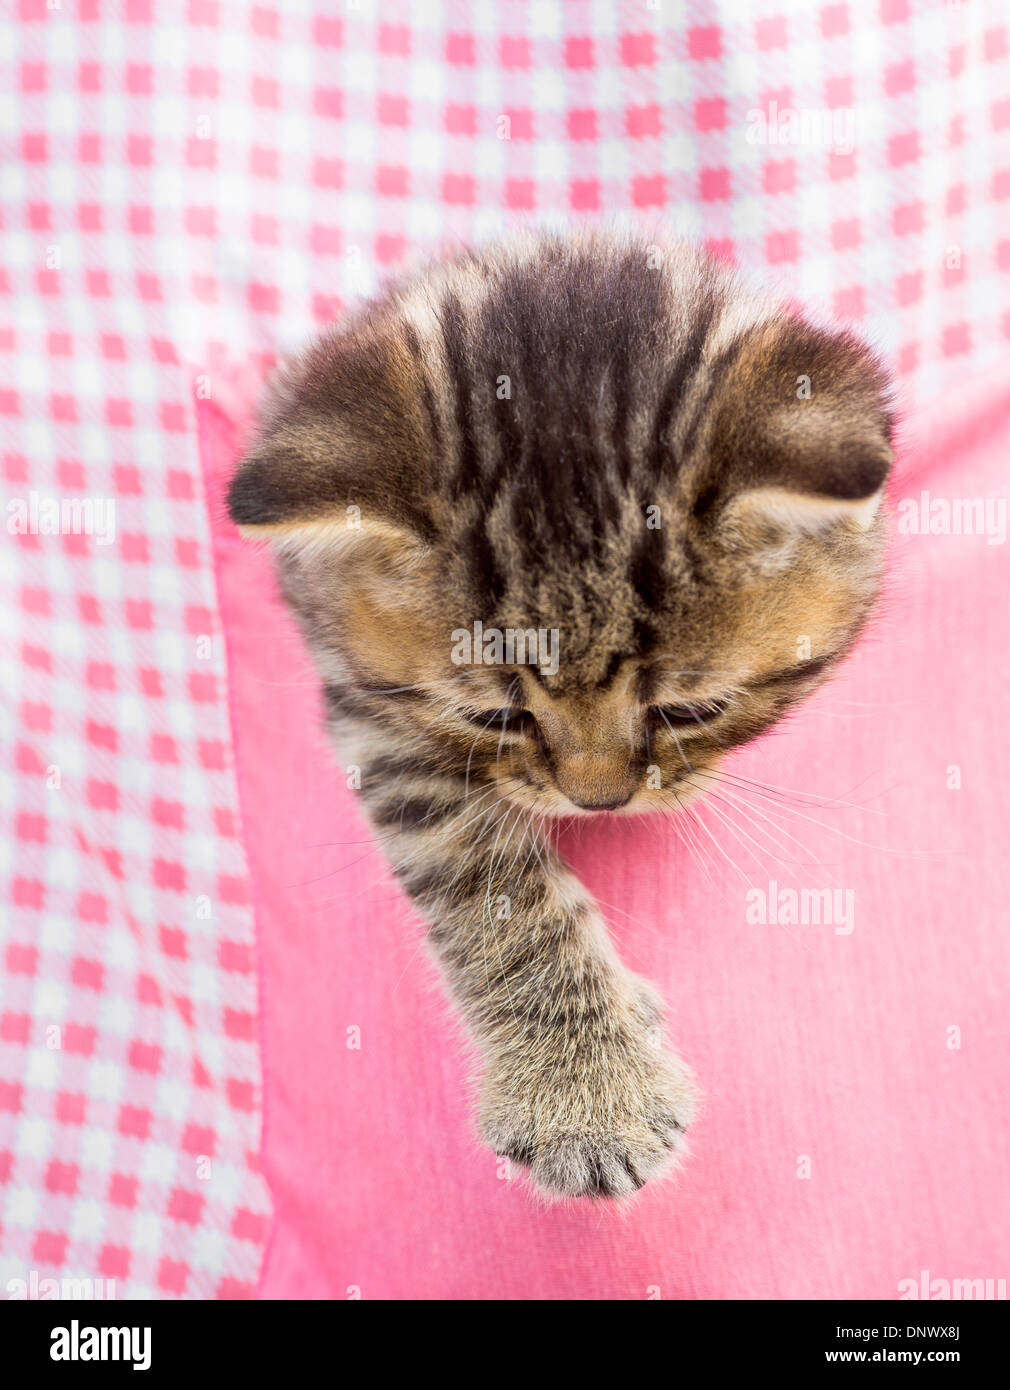 kitten cat in pink pocket Stock Photo